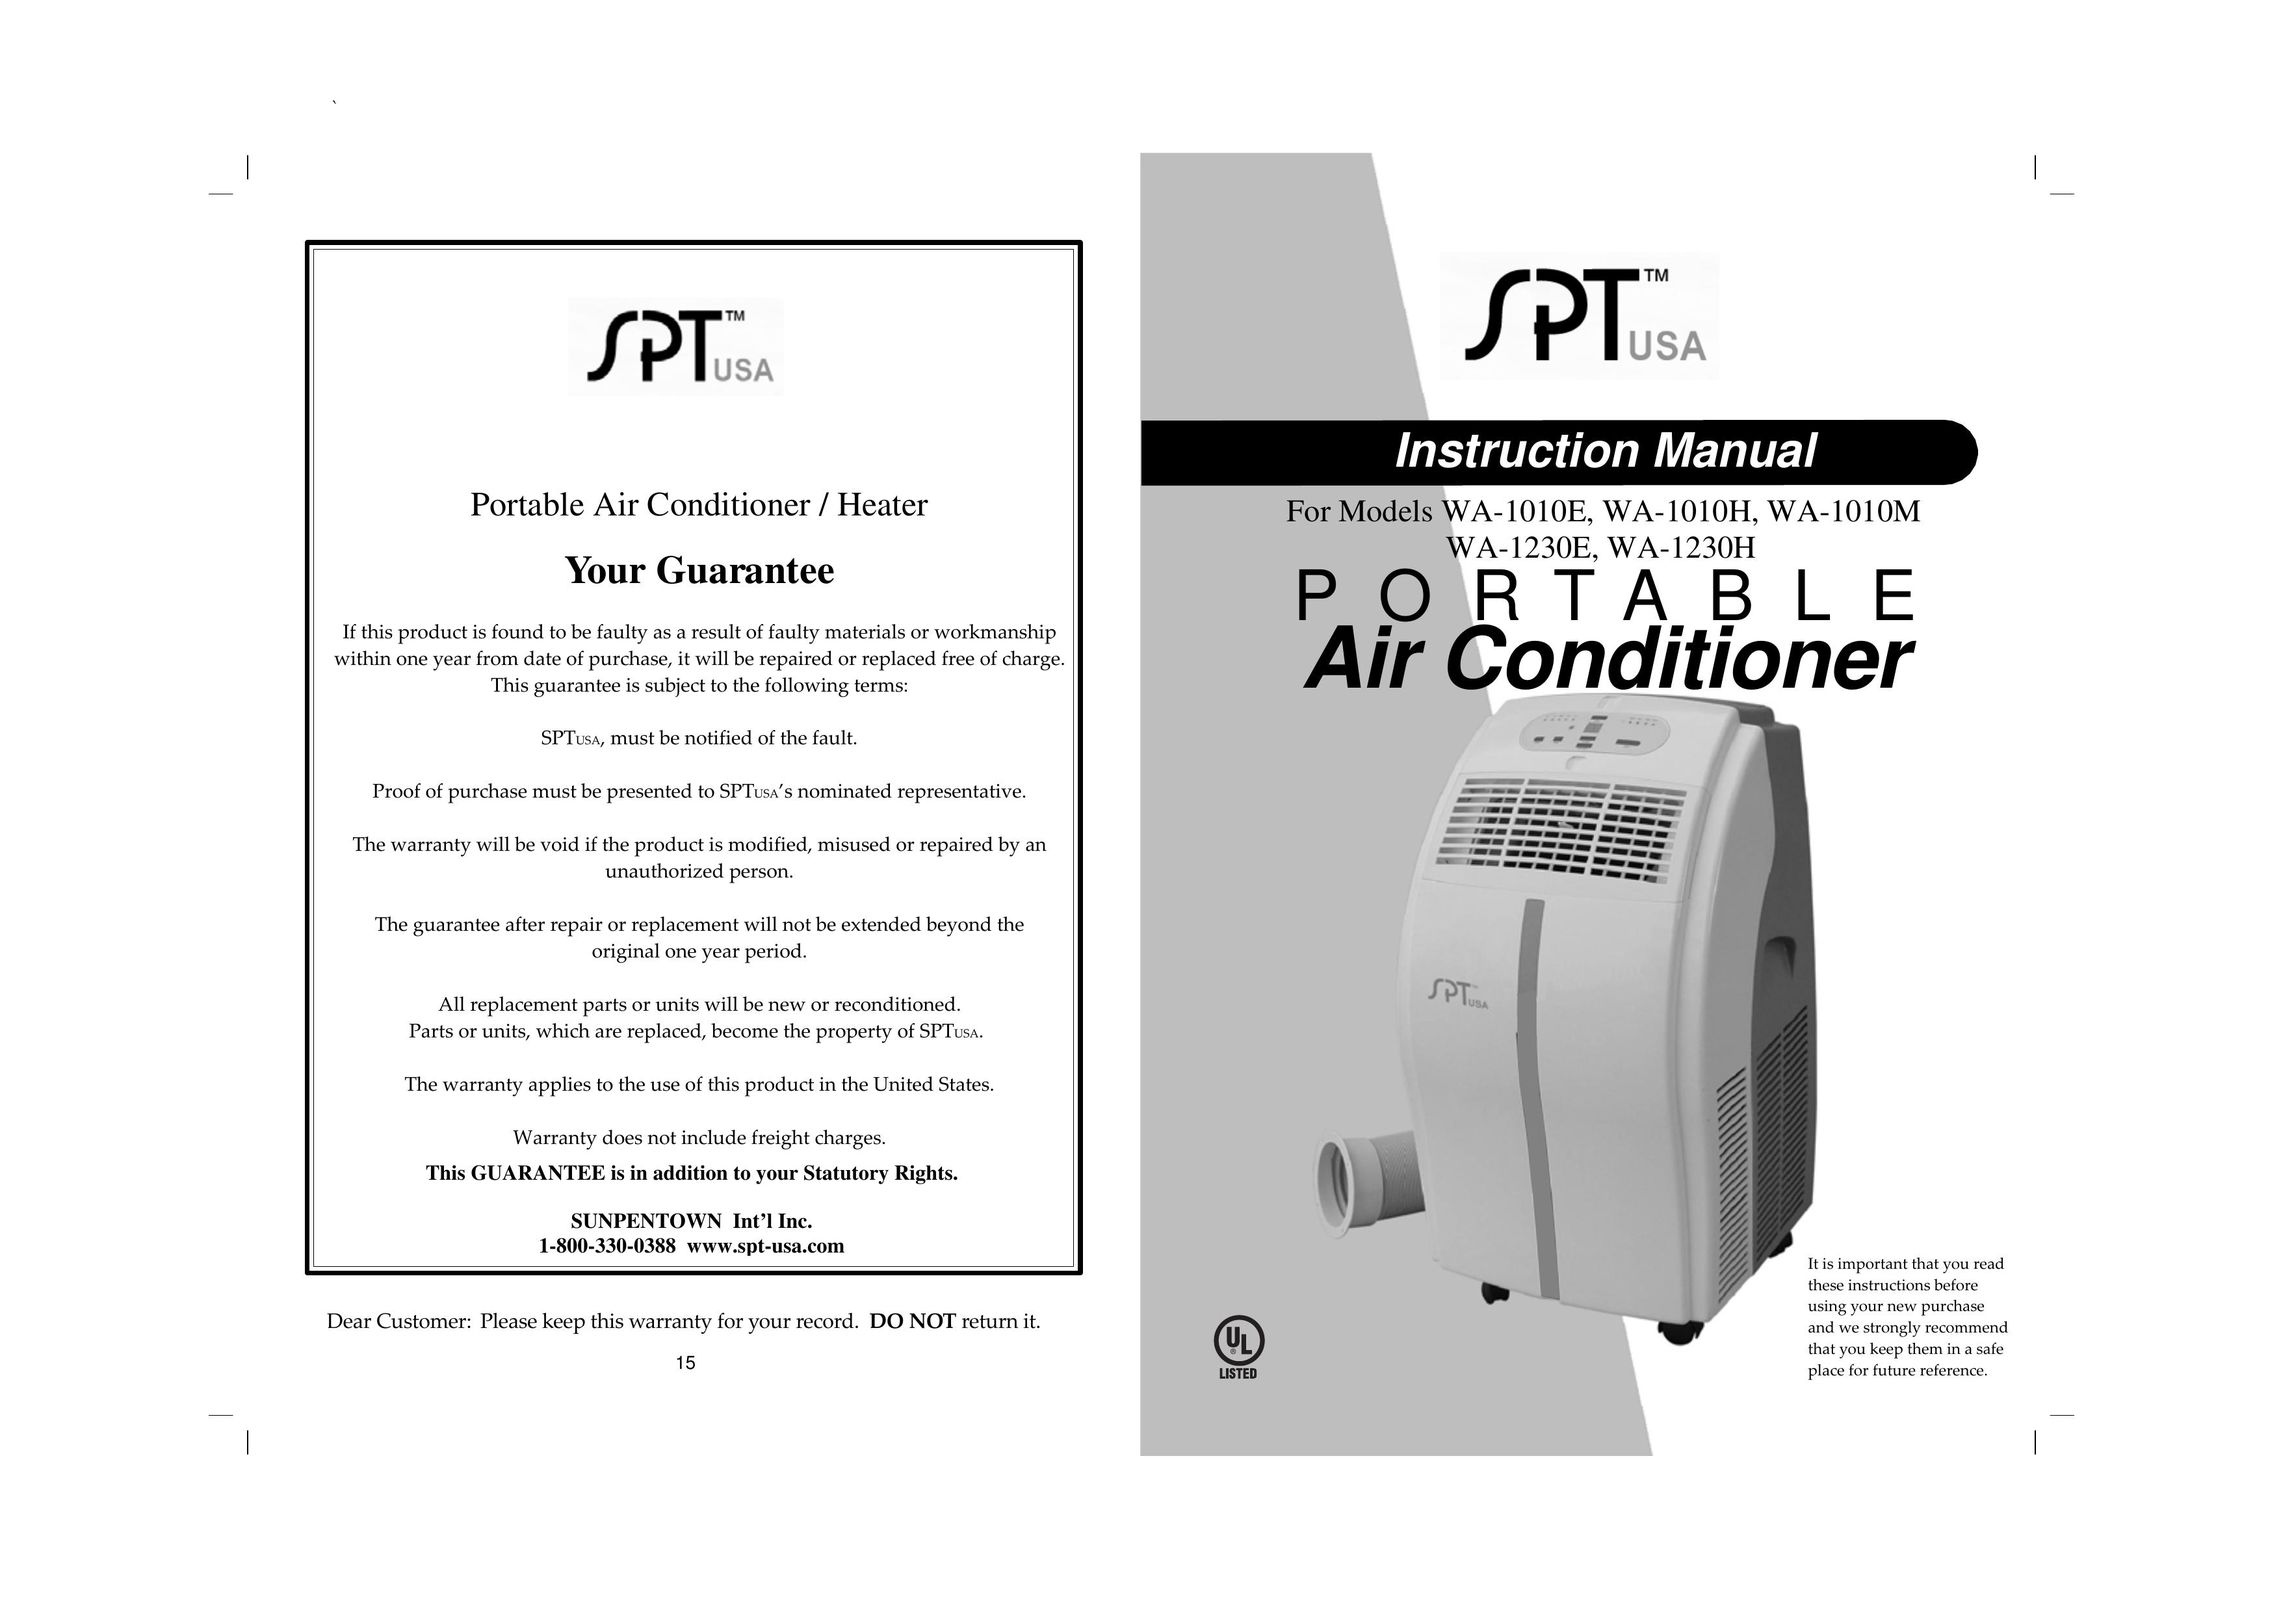 Sunpentown Intl WA-1230H Air Conditioner User Manual